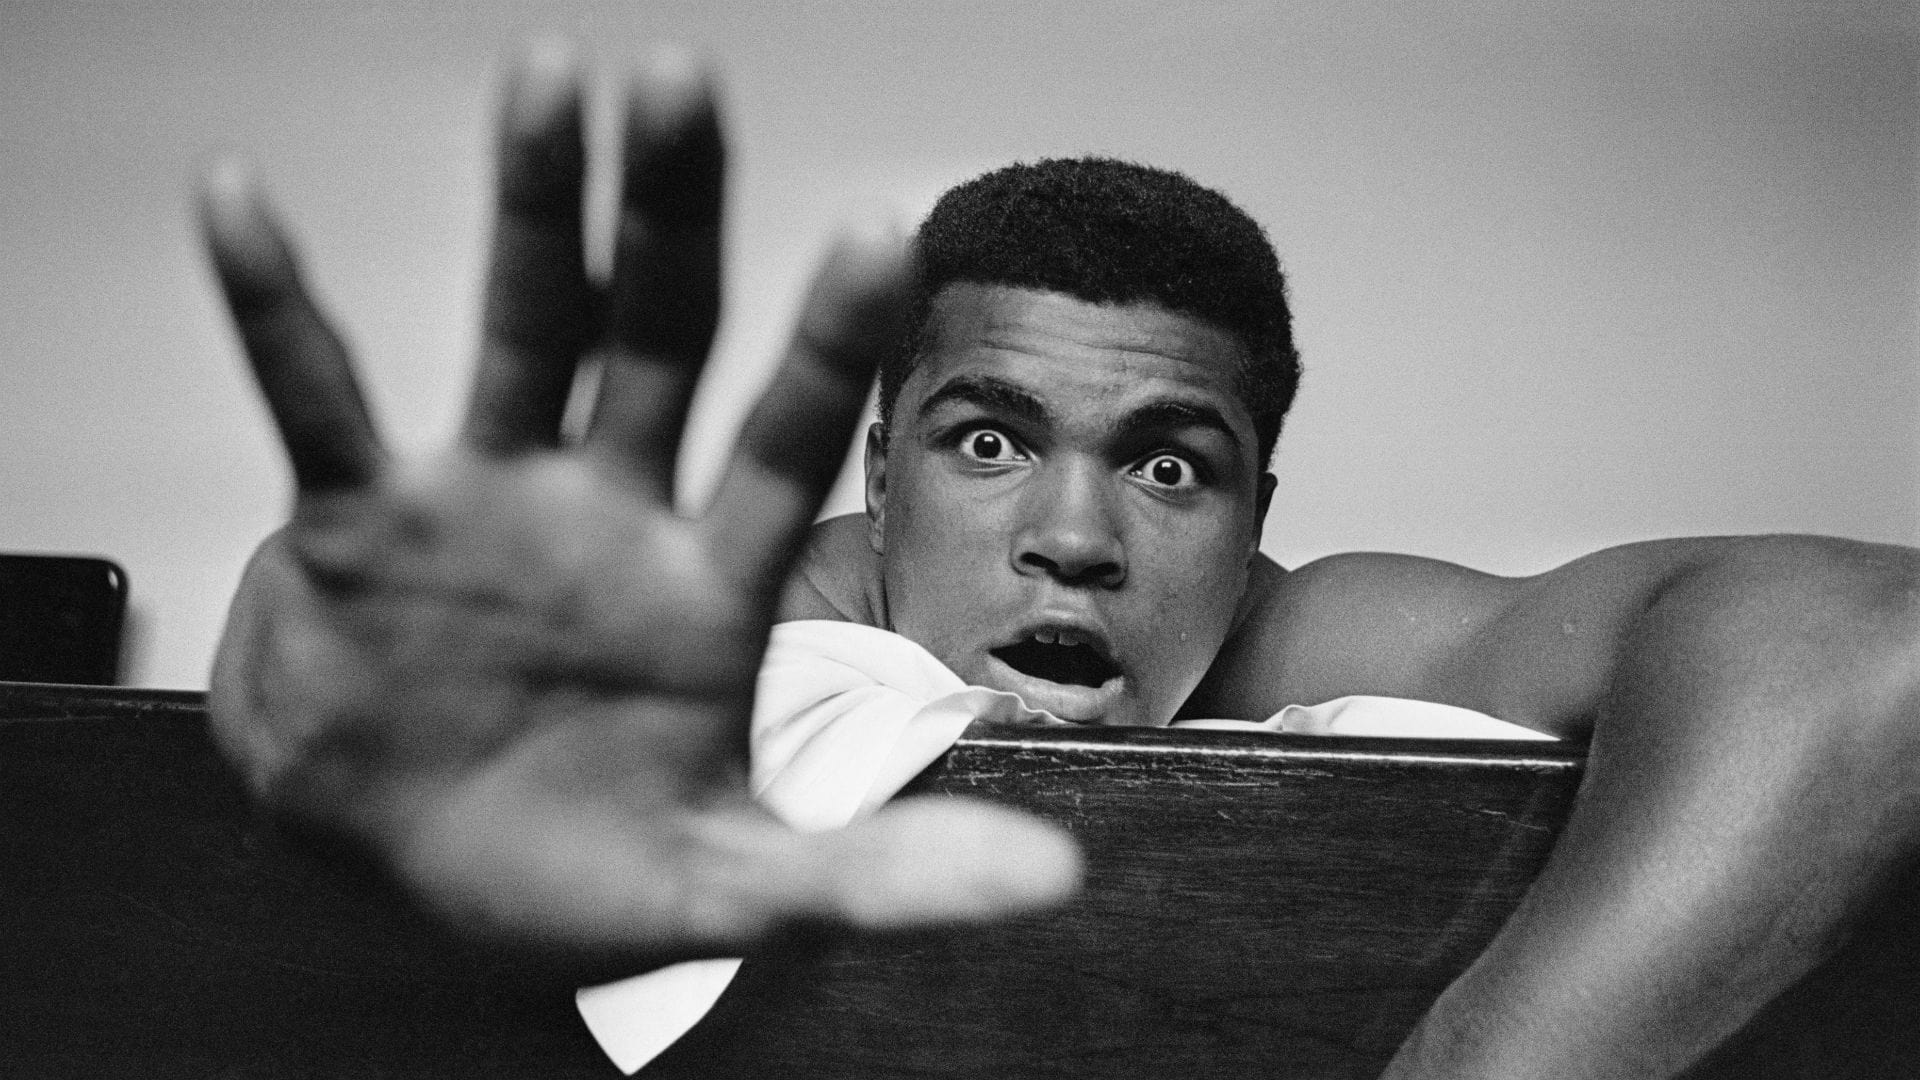 Muhammad Ali’s Greatest Fight 2013 123movies